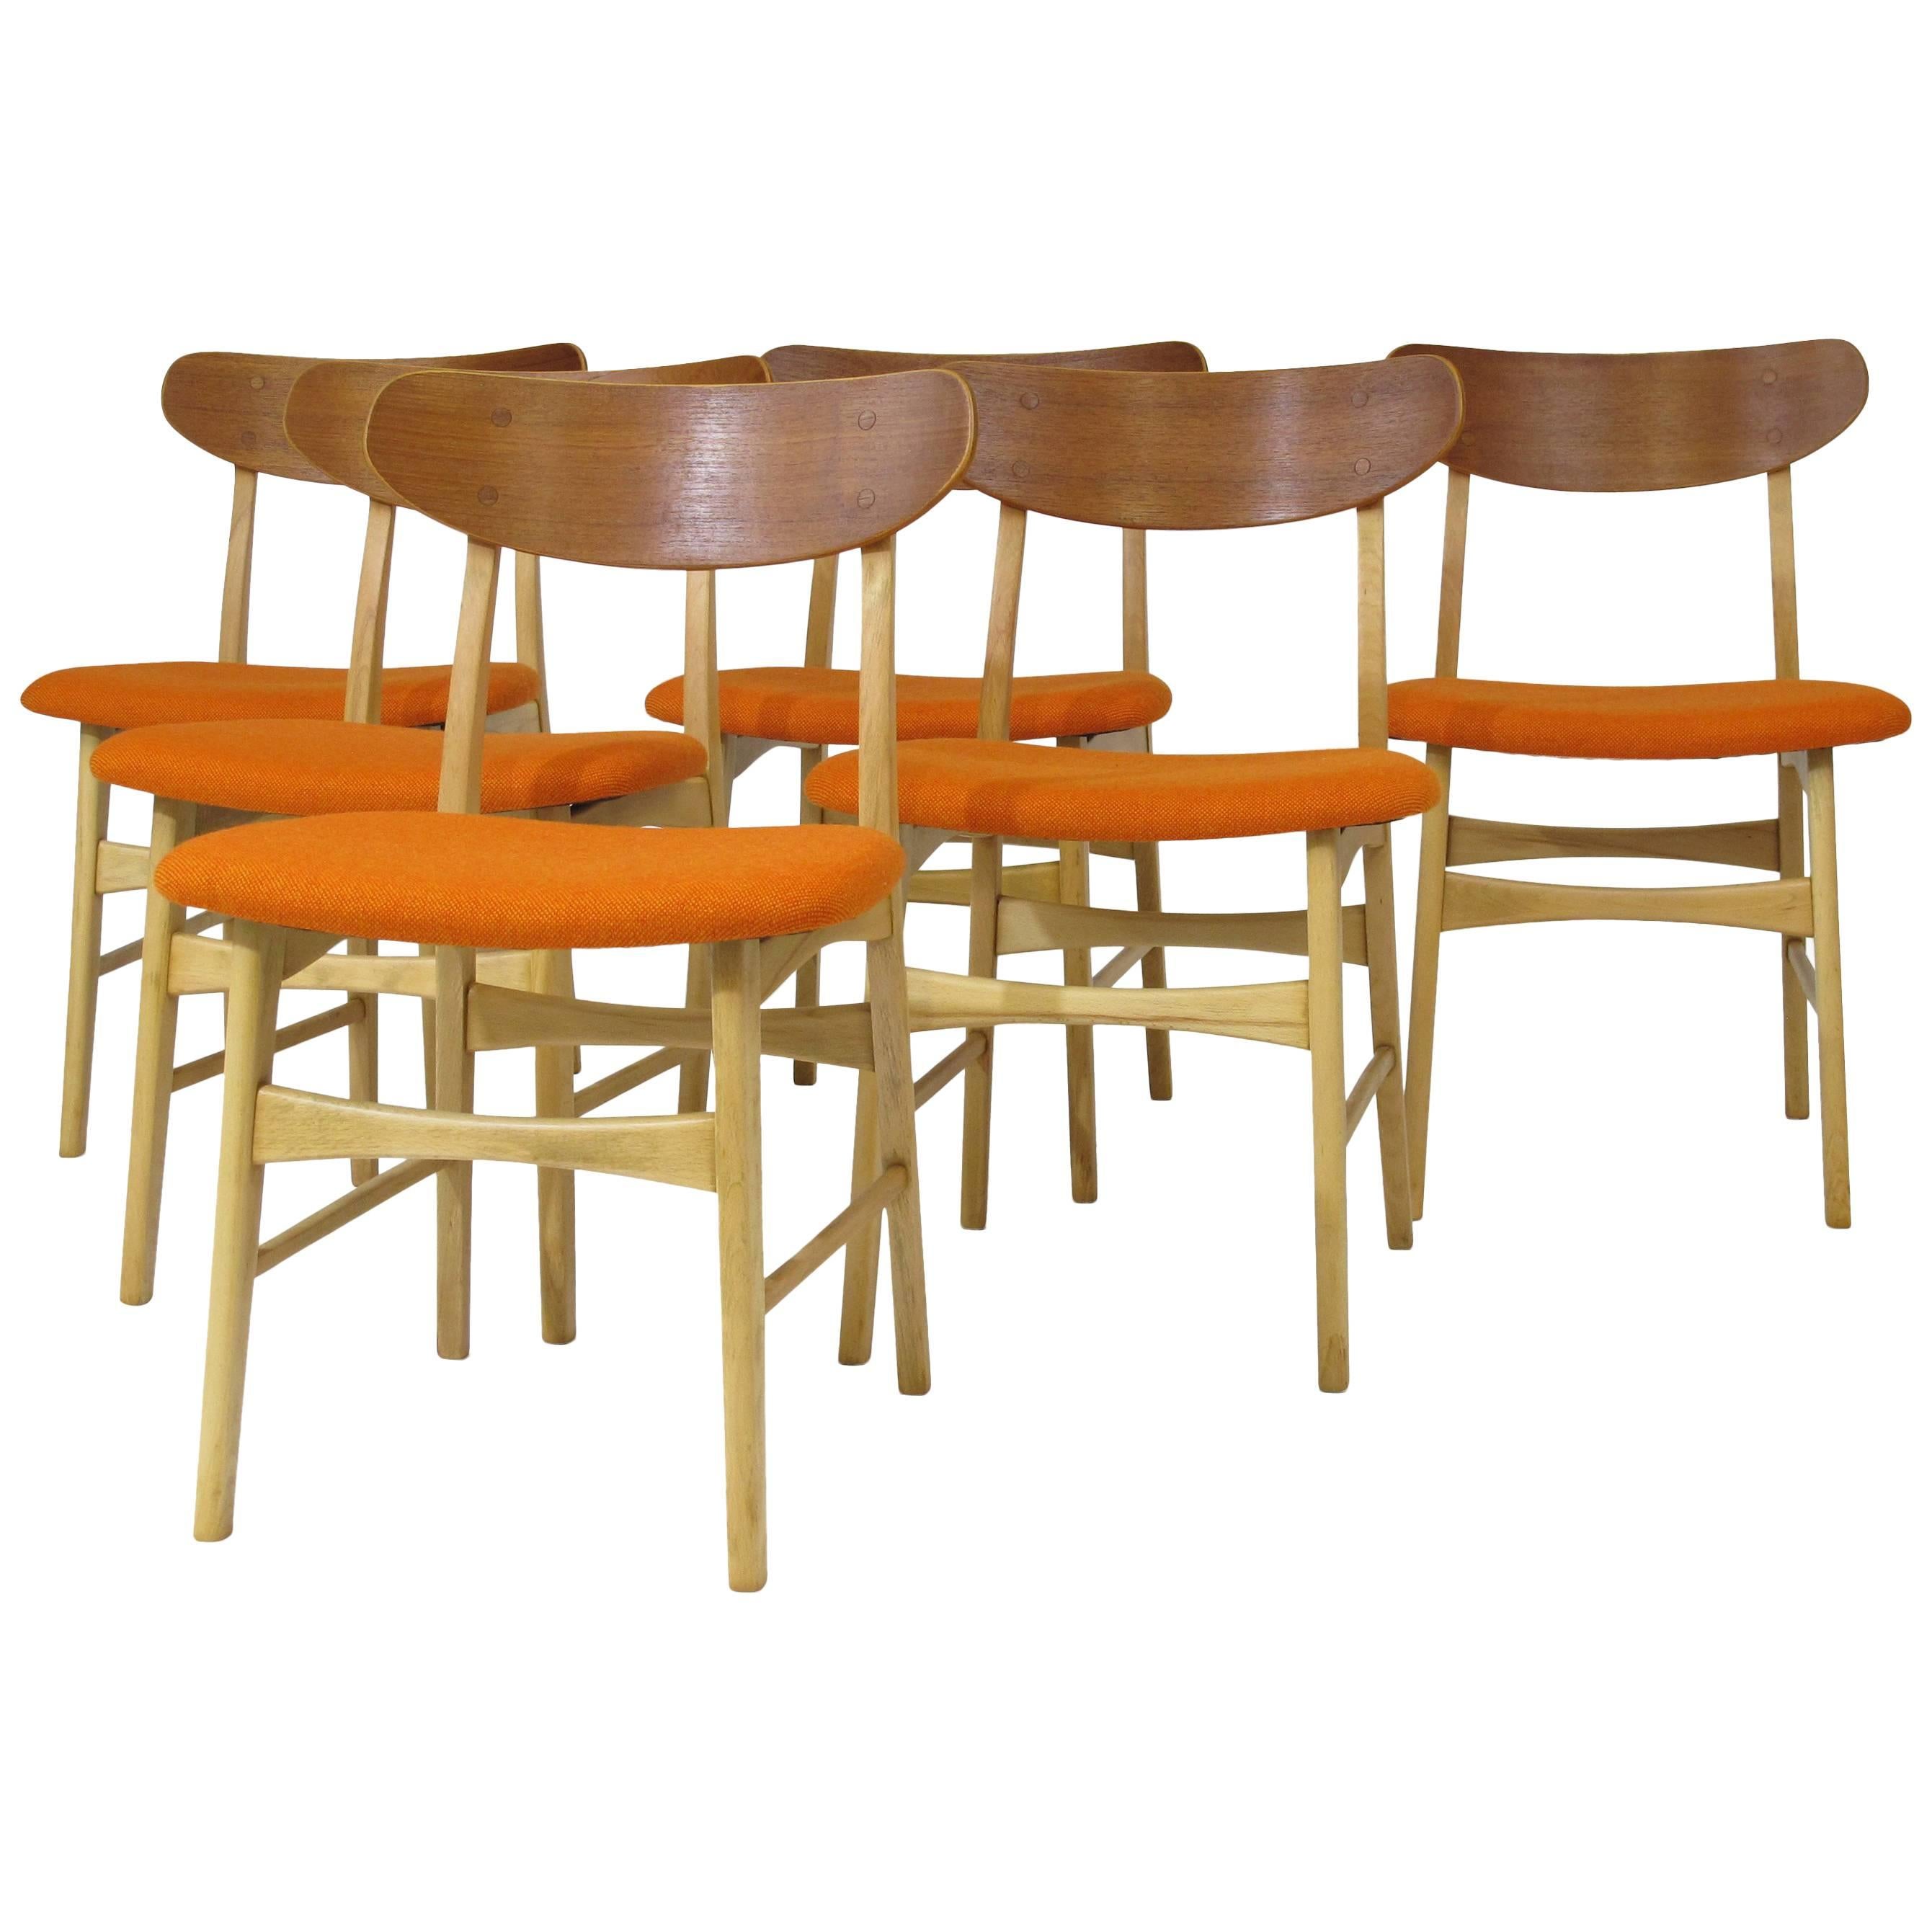 Basic Danish Teak and Beech Dining Chairs with New Orange Seats